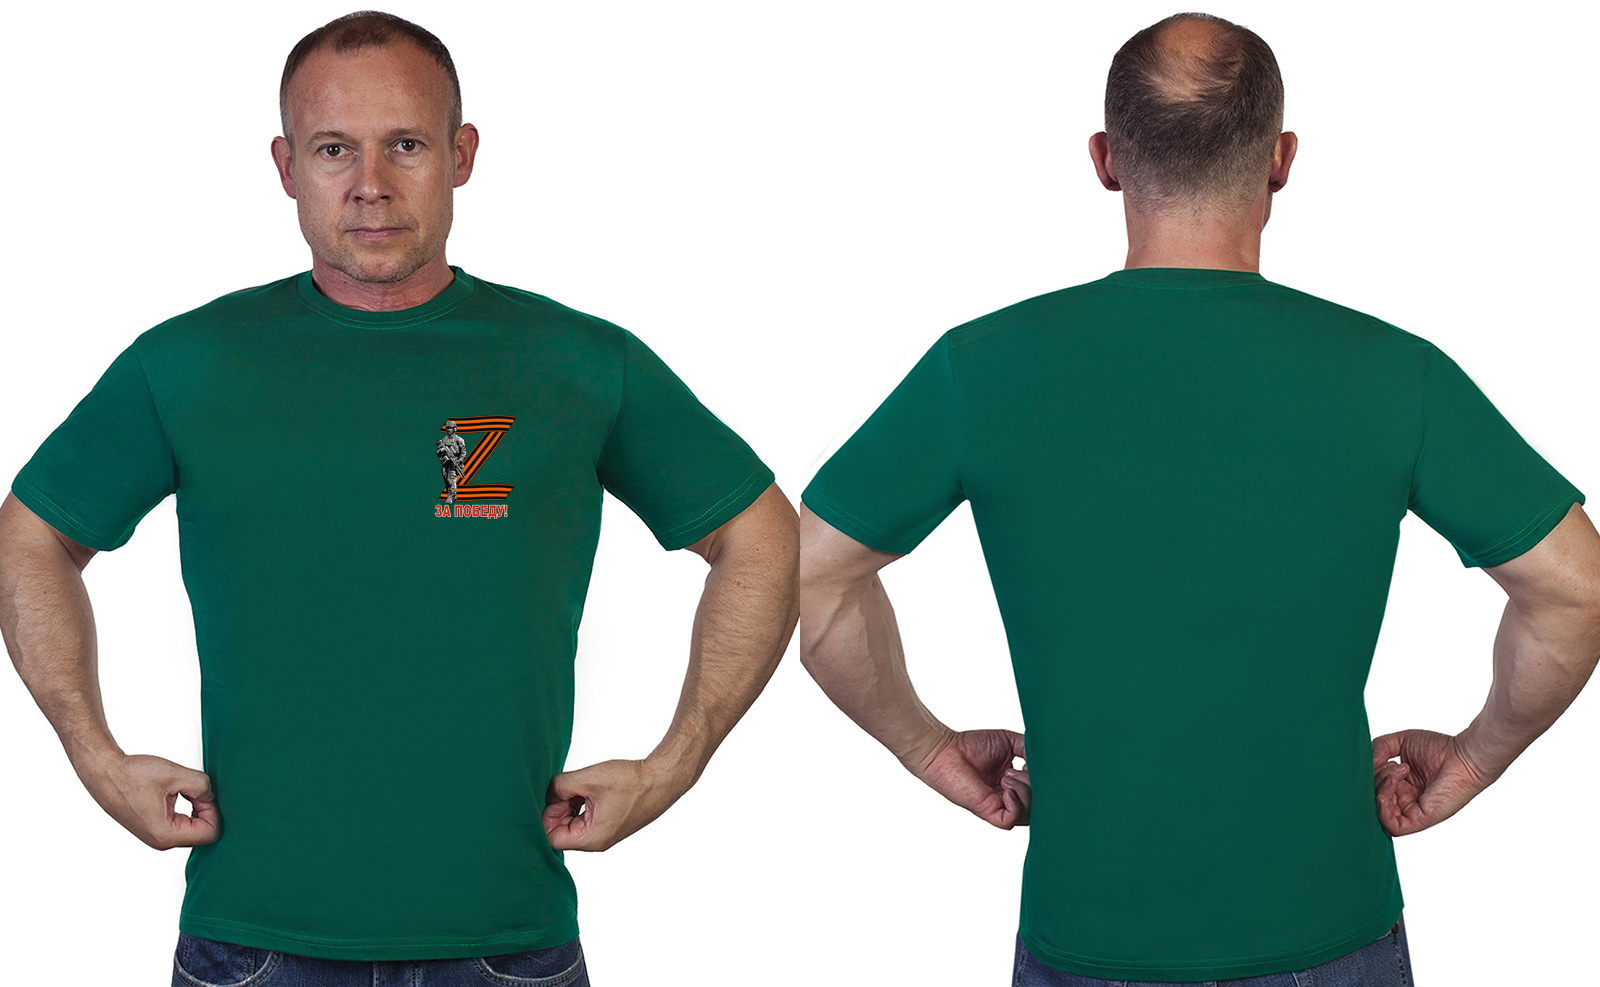 Купить футболку Zа Победу мужчине